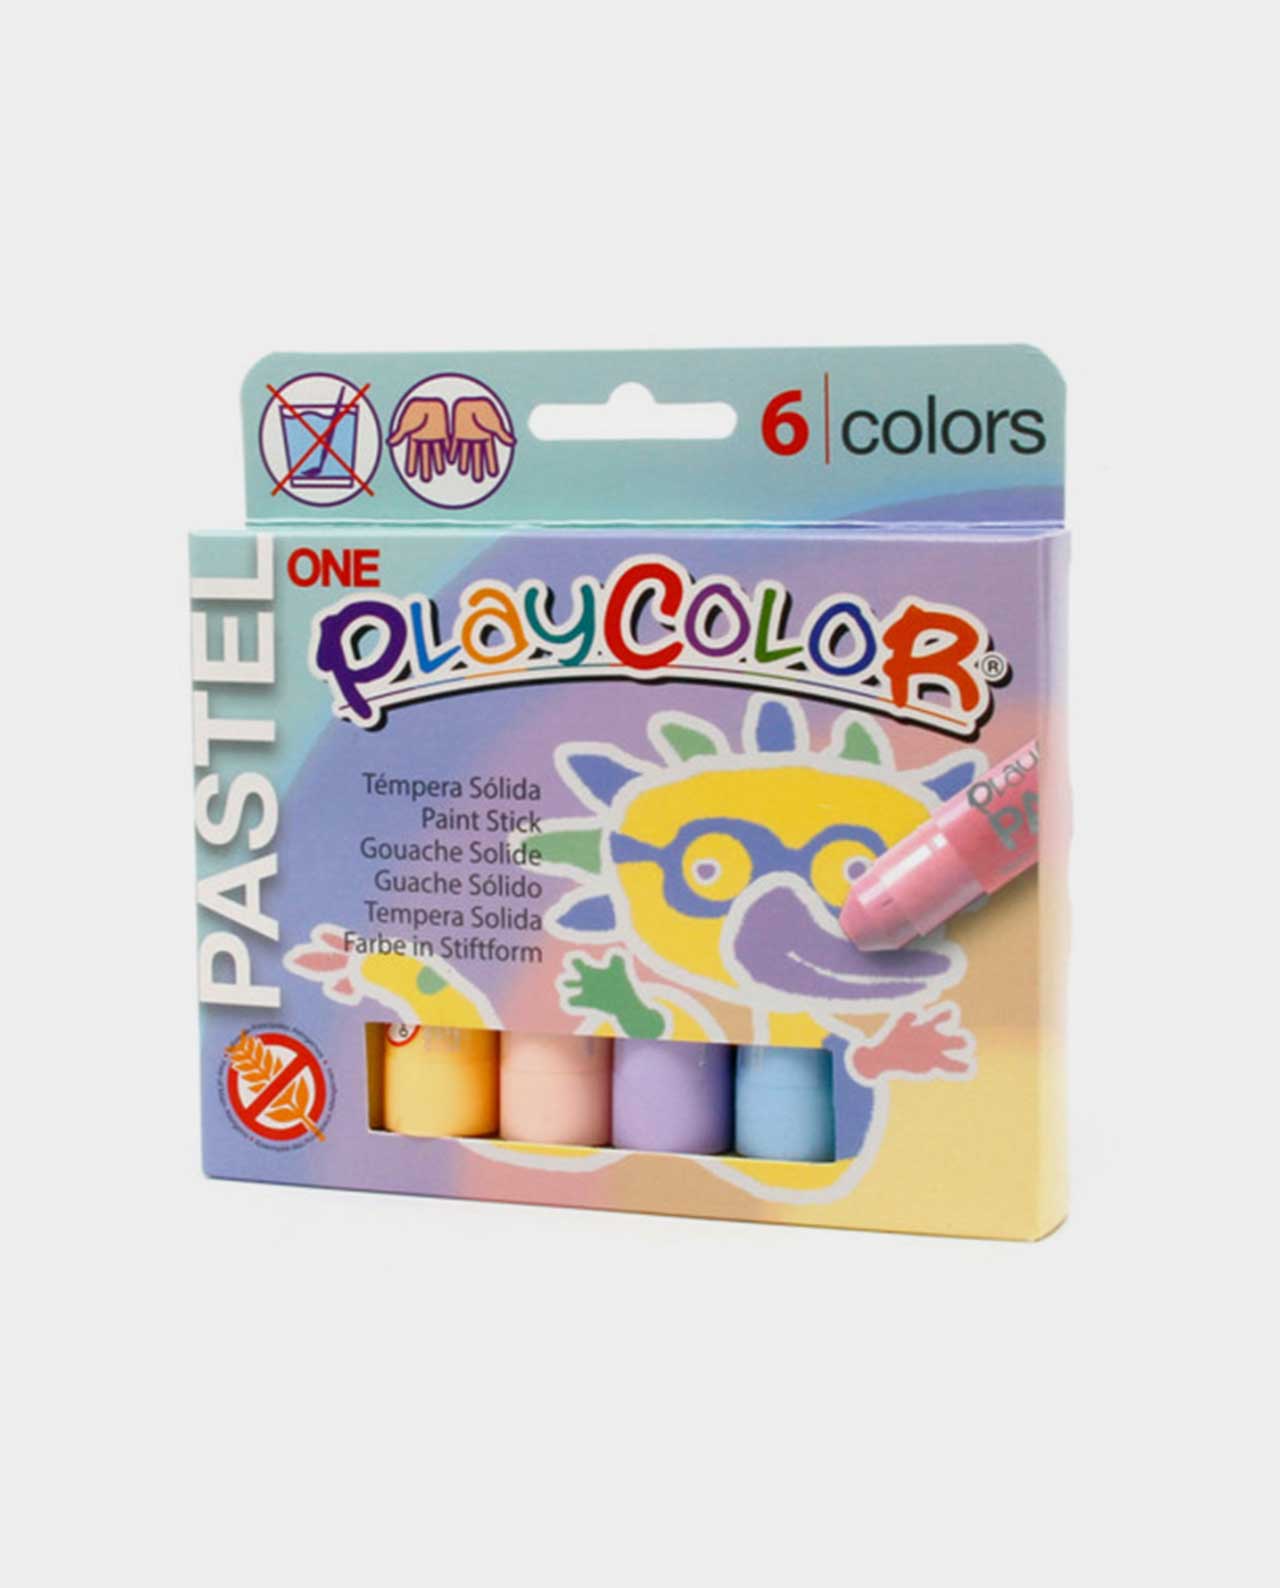 https://lacolmenacrianza.com/wp-content/uploads/2022/07/la-colmena-tempera-solida-play-color-pastel-01.jpg